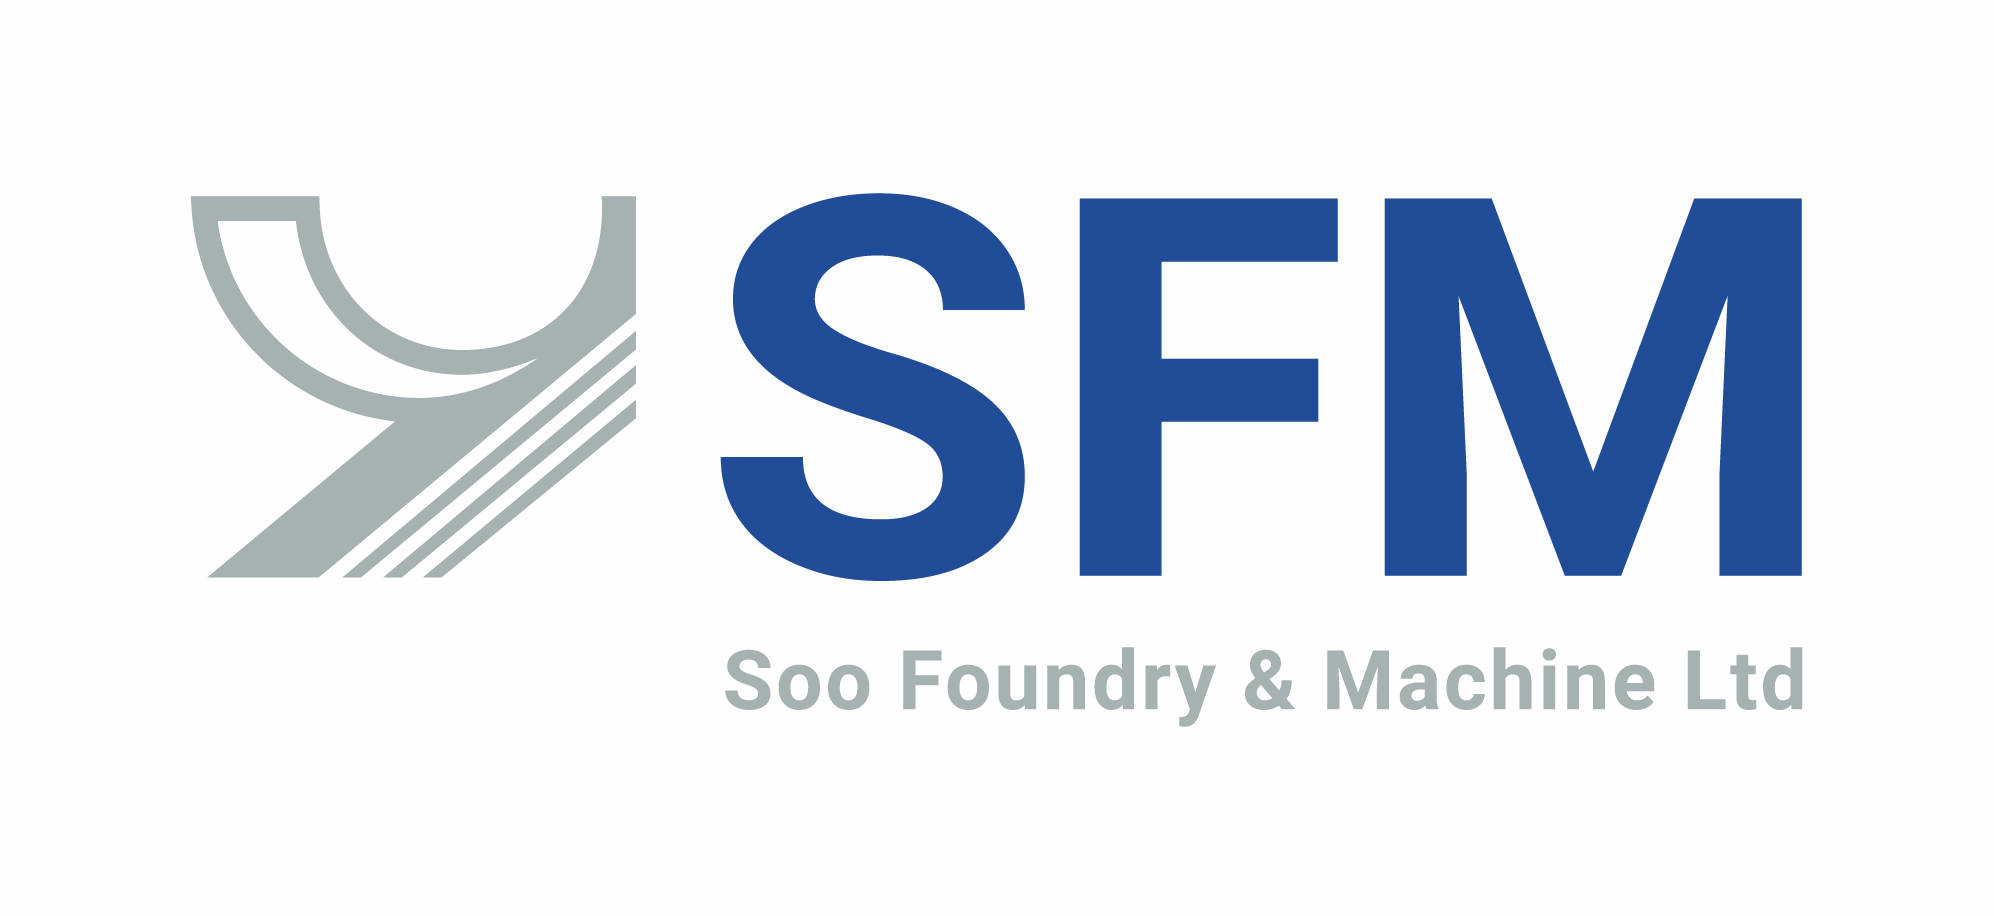 Soo Foundry & Machine